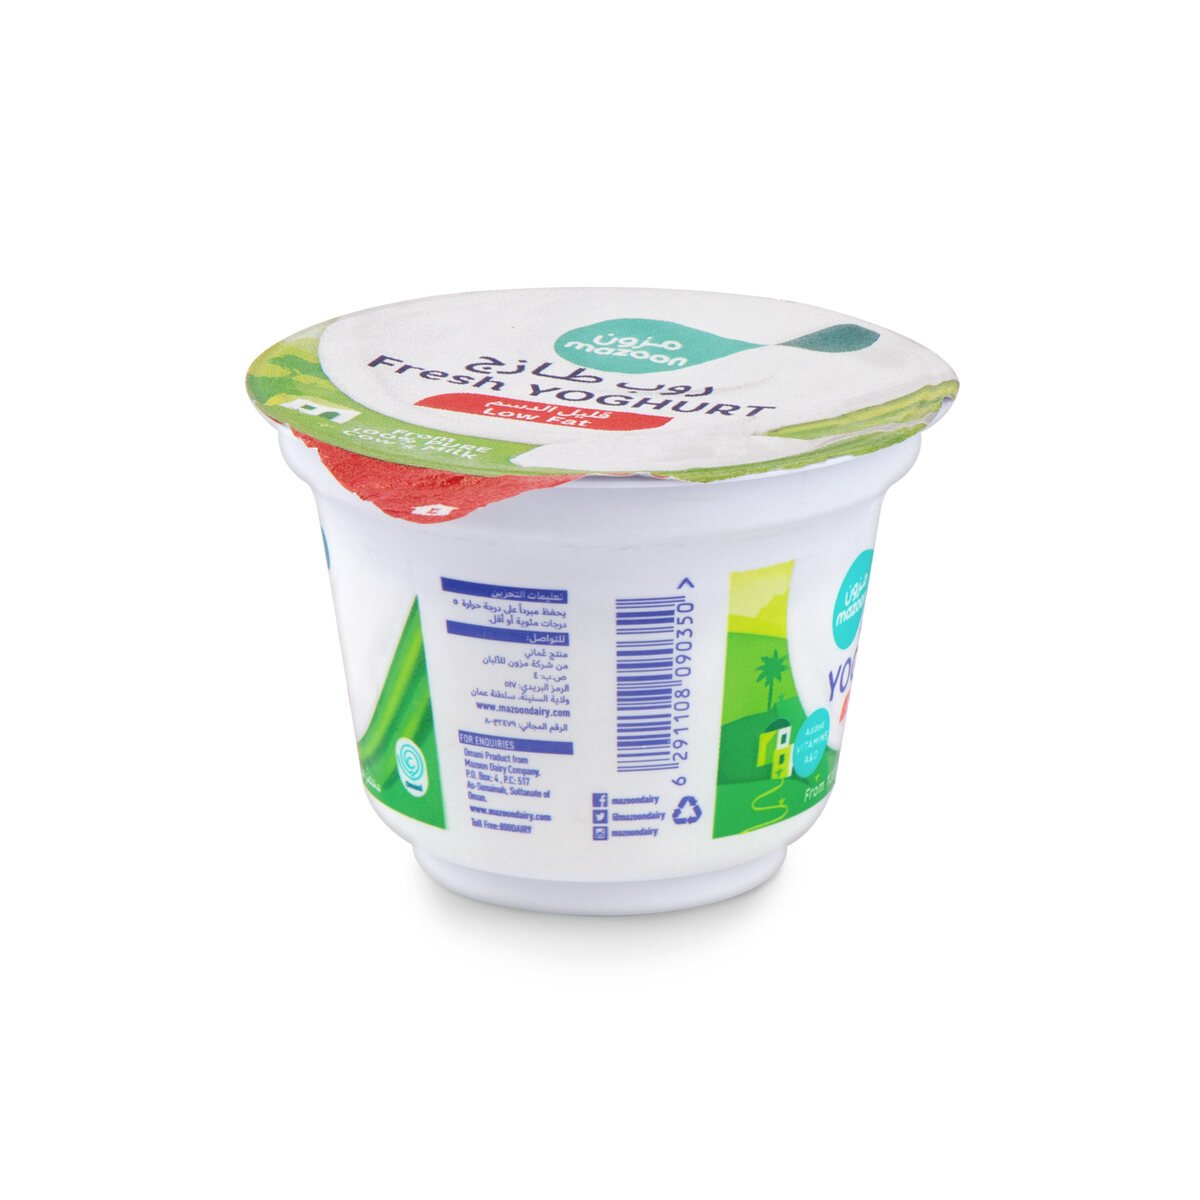 Mazoon Fresh Yoghurt Low Fat  170g